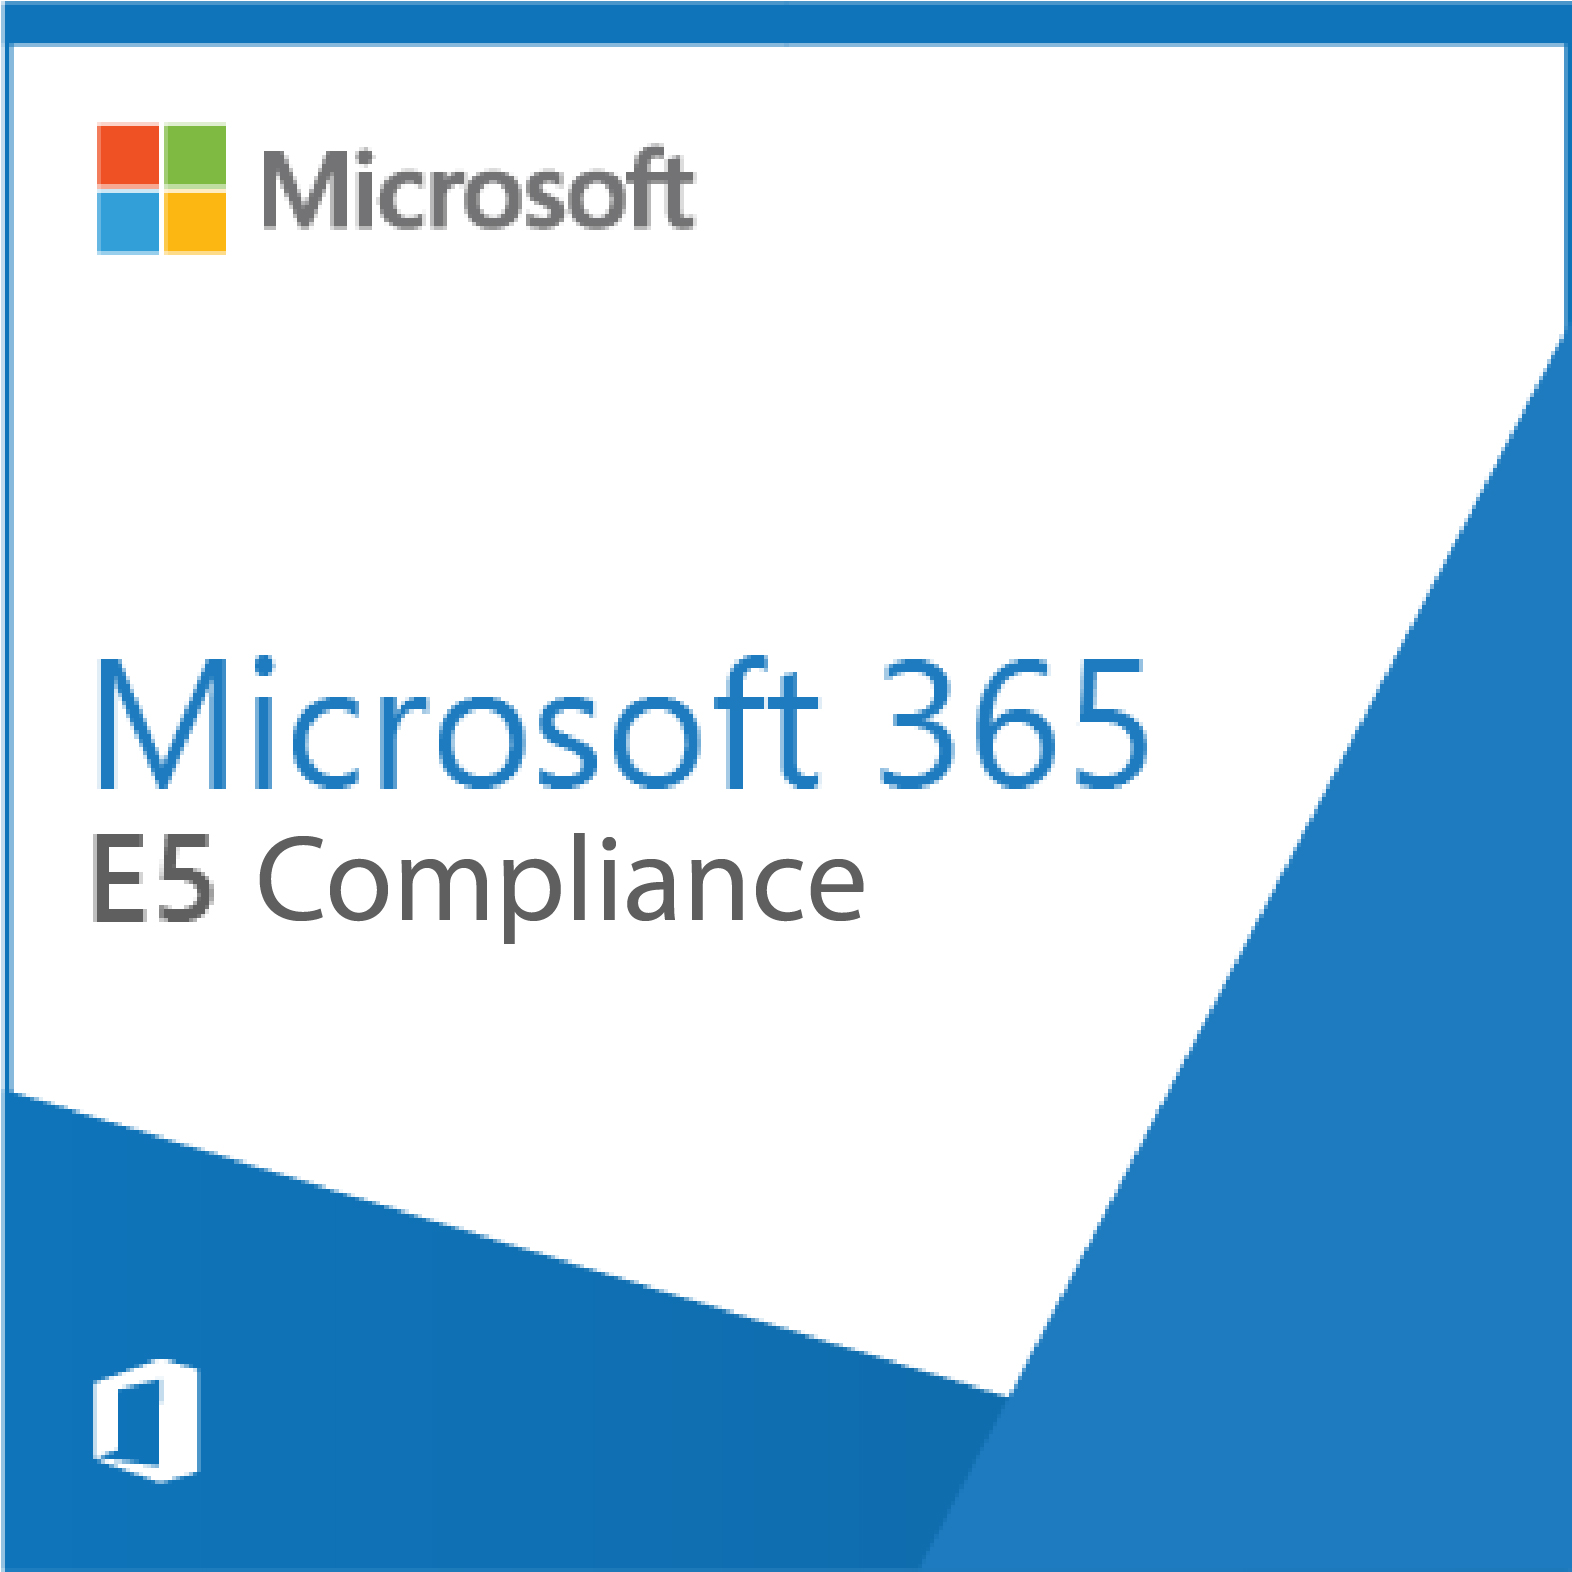 Microsoft 365 E5 Compliance